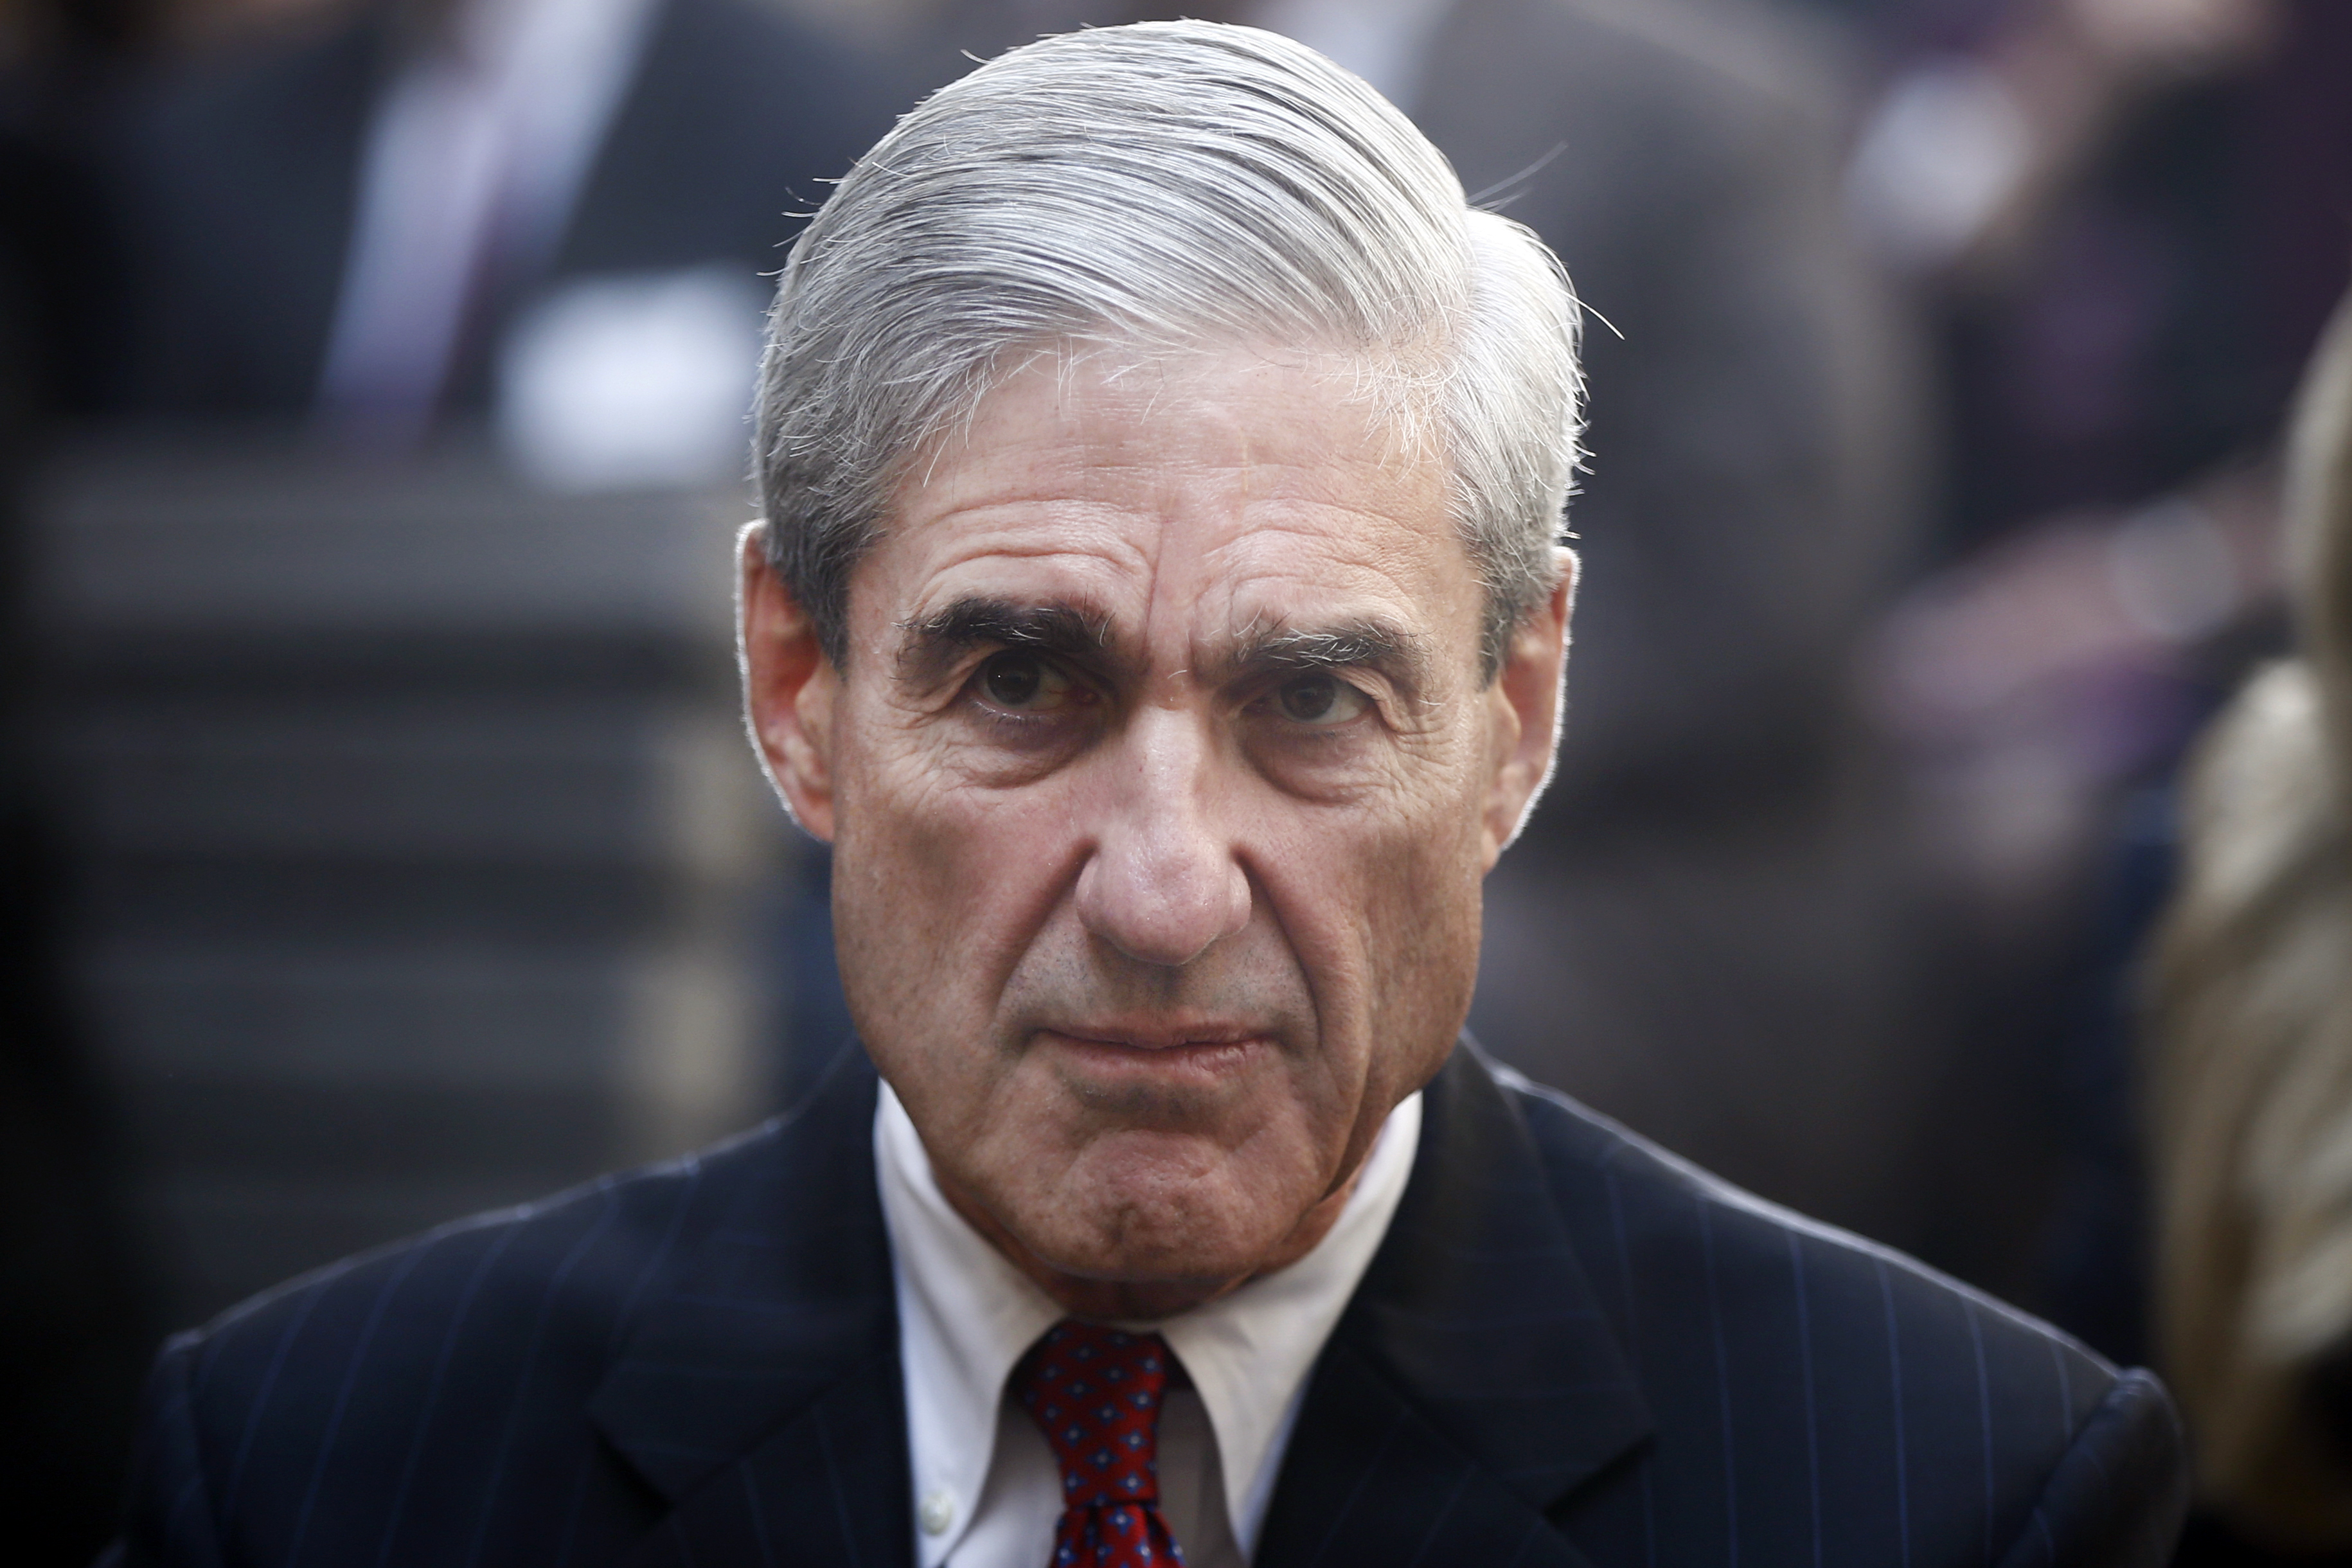 Another Mueller investigators Democratic ties raise new bias questions